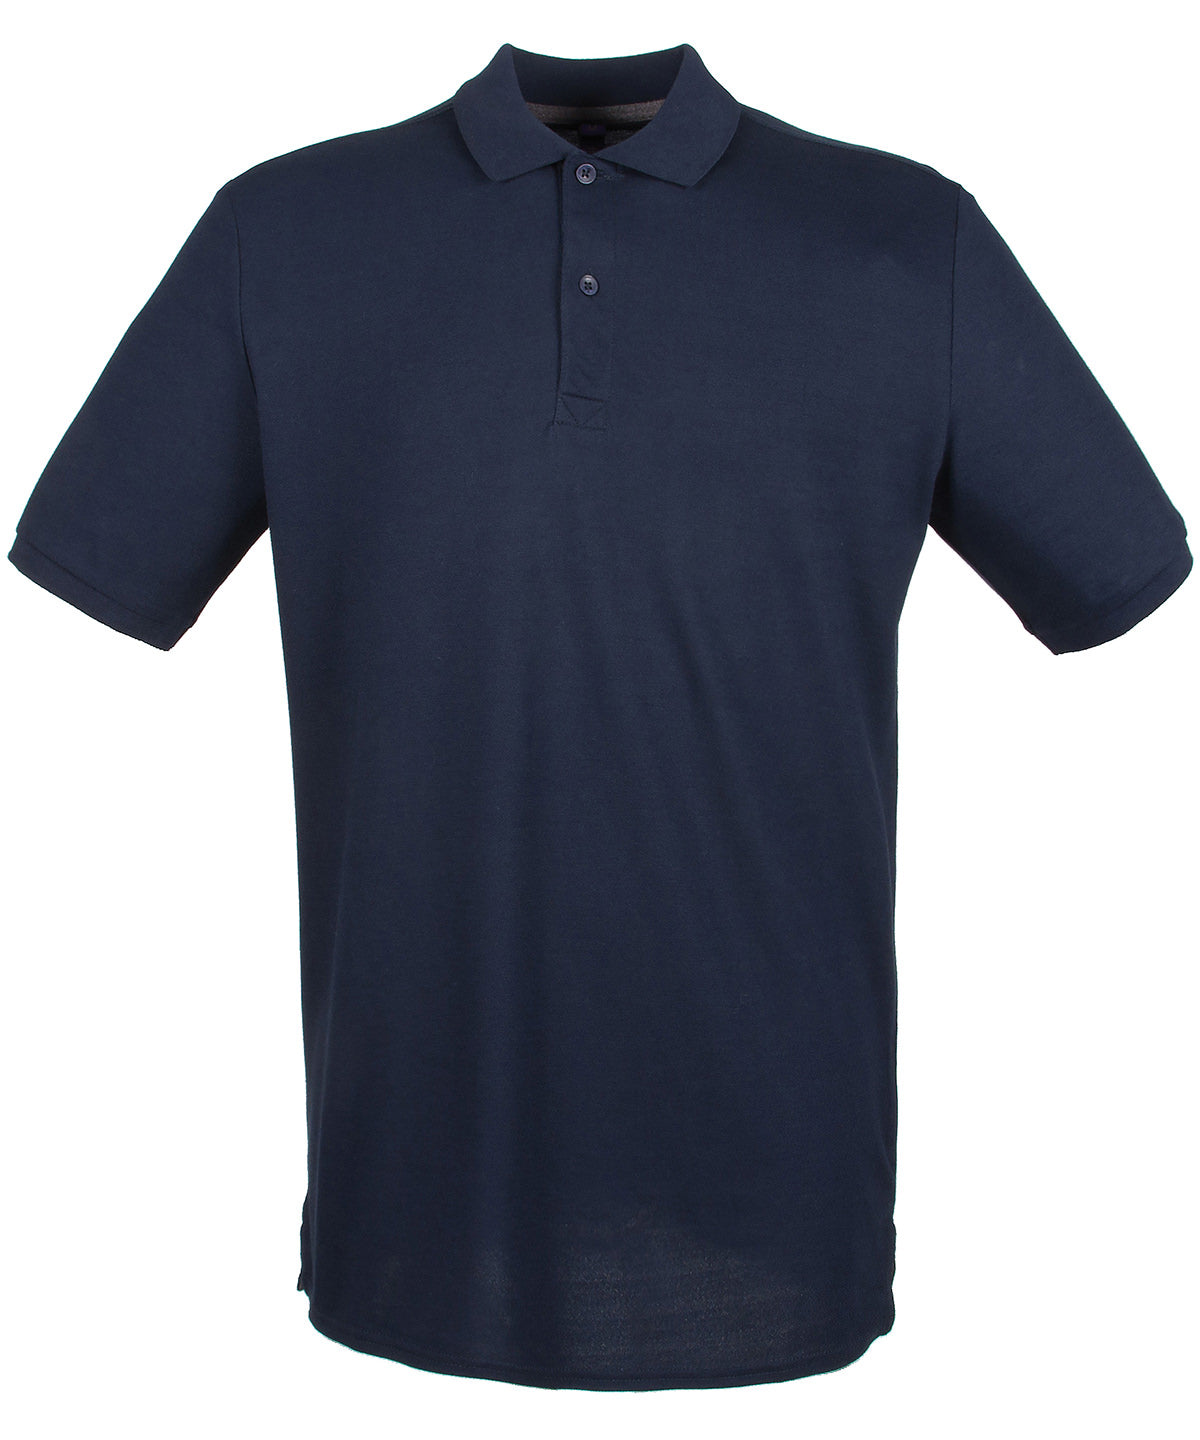 Personalised Polo Shirts - Black Henbury Micro-fine piqué polo shirt